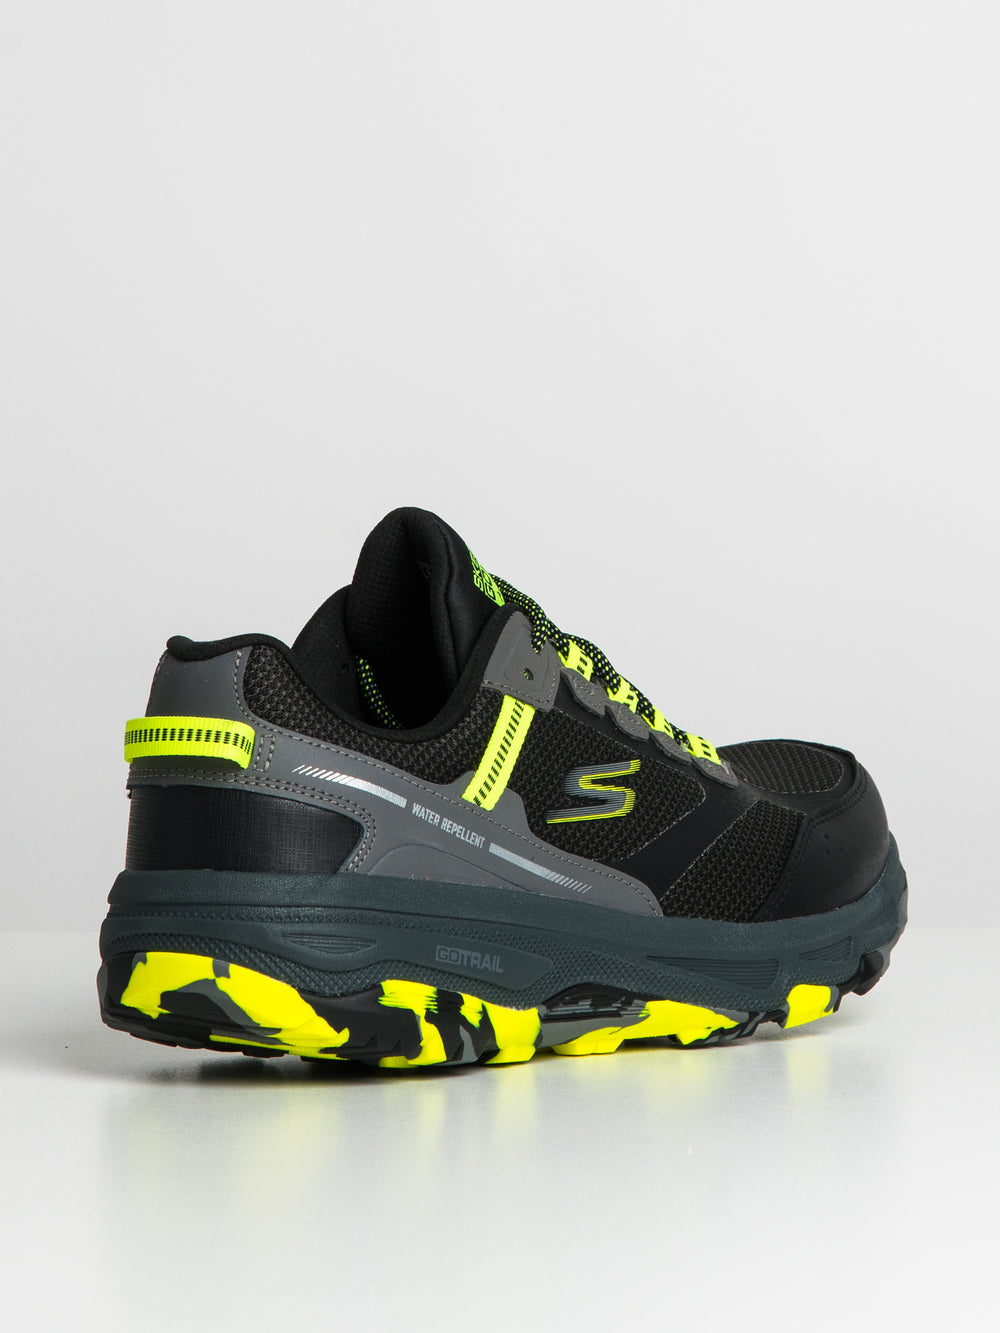 Skechers Running Shoes For Men ( Black ) for Men - Buy Skechers Men's Sport  Shoes at 5% off.